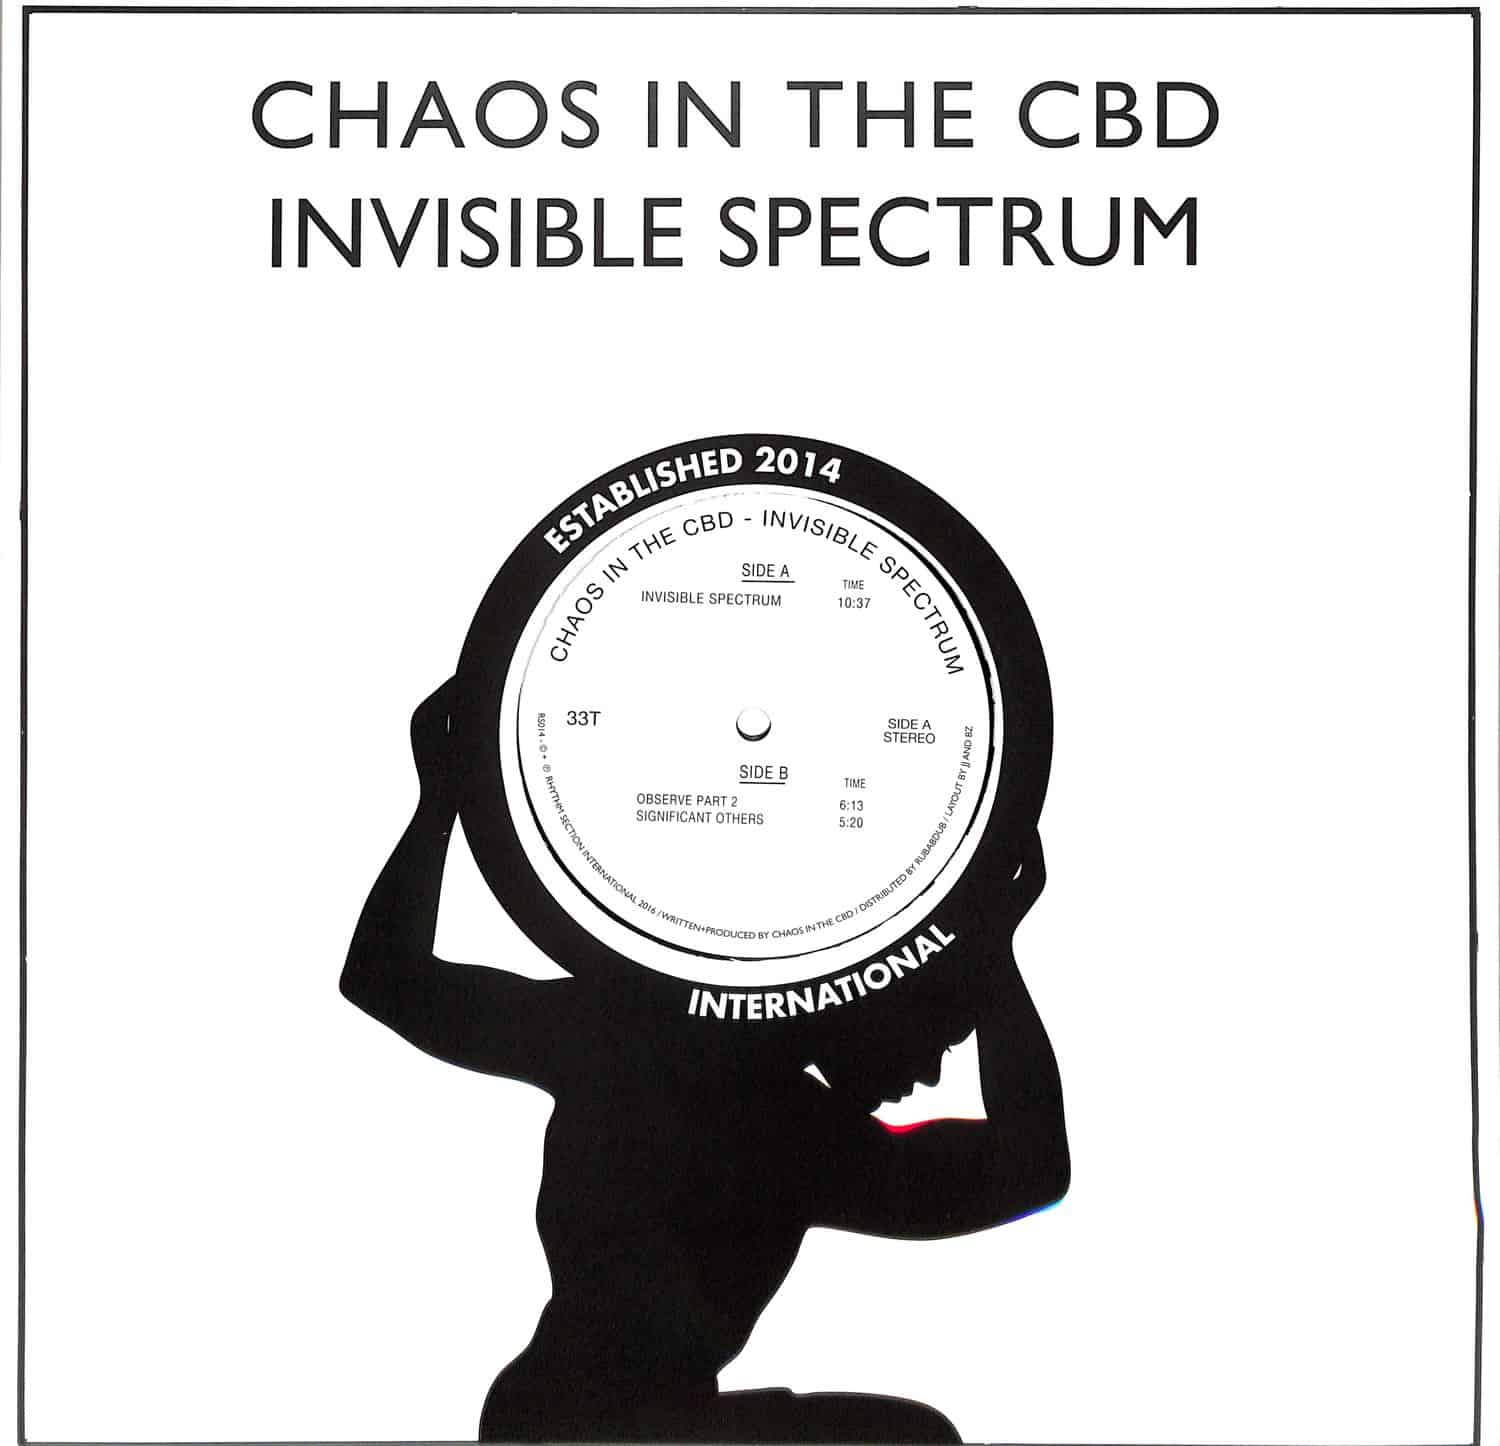 Chaos in the CBD - INVISIBLE SPECTRUM